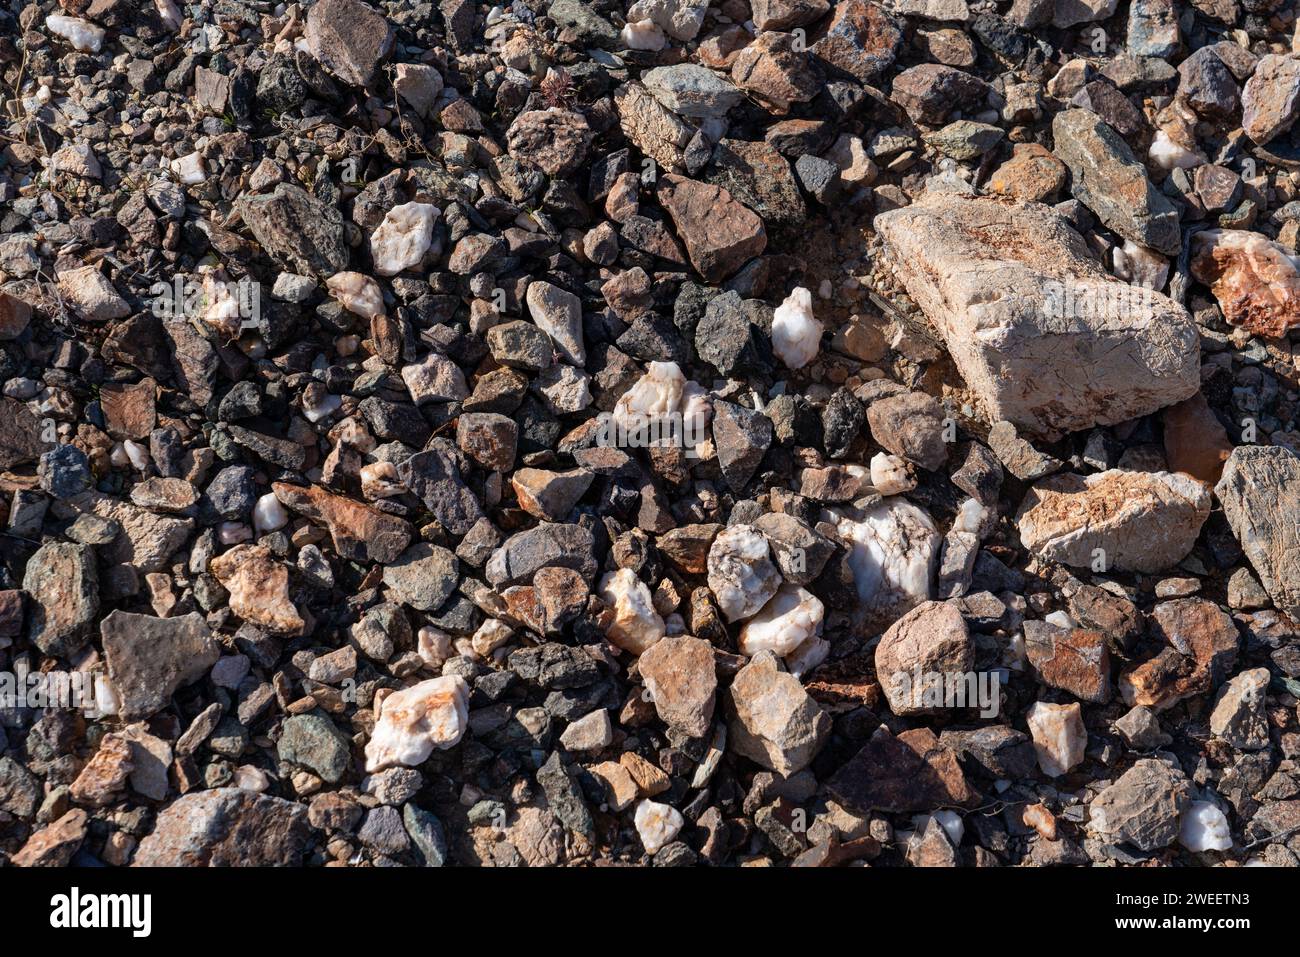 Quartz and other rocks on the ground of the Sonoran Desert near Quartzsite, Arizona. Stock Photo